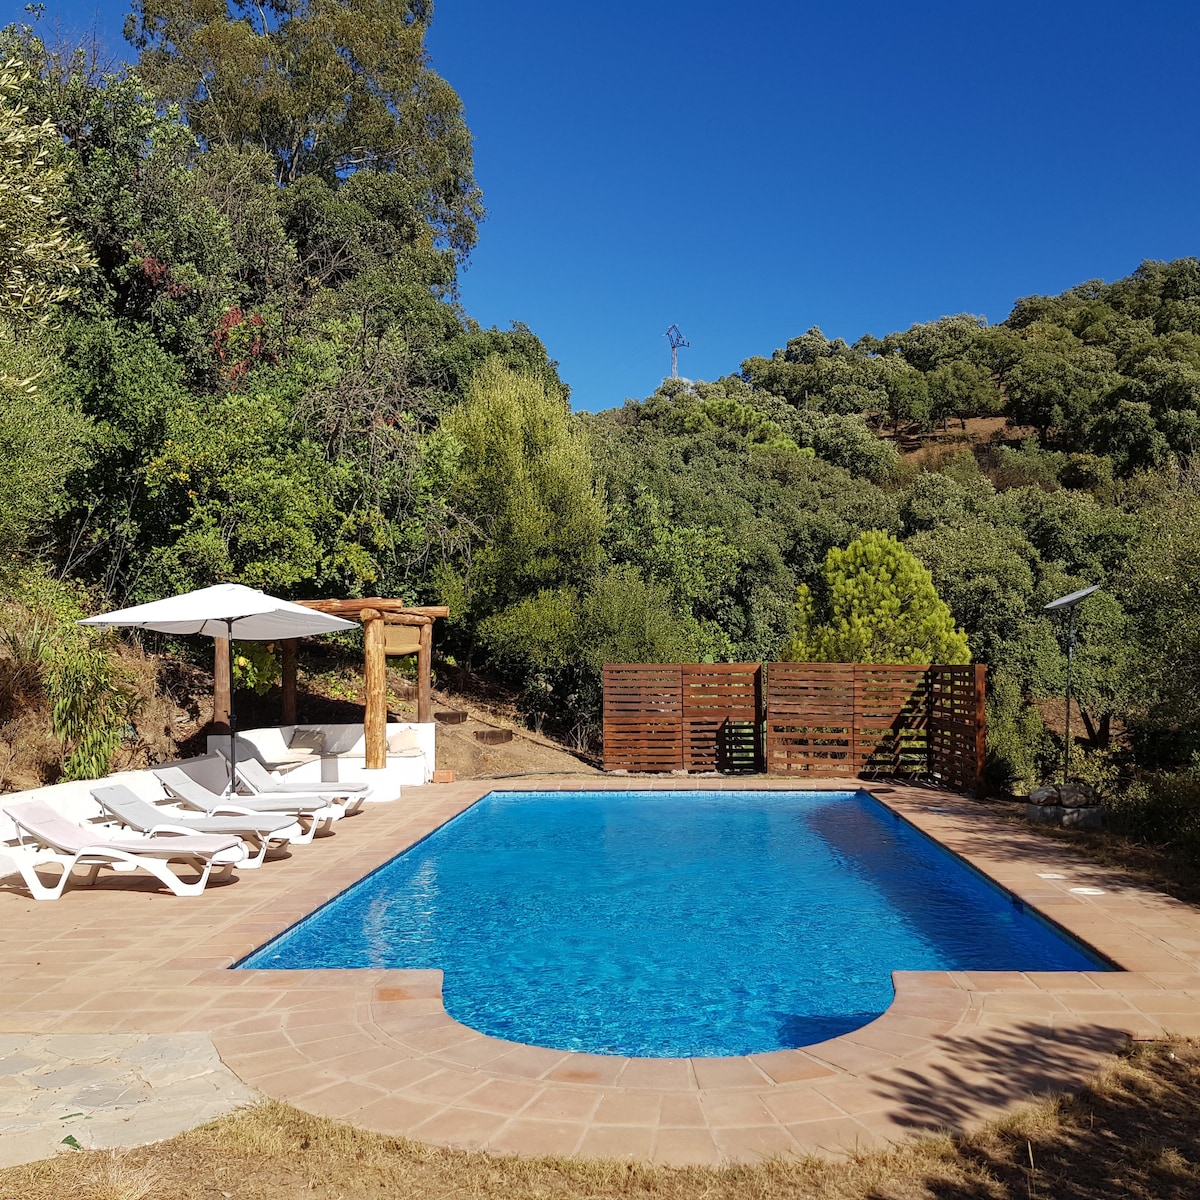 Costa del sol villa with pool